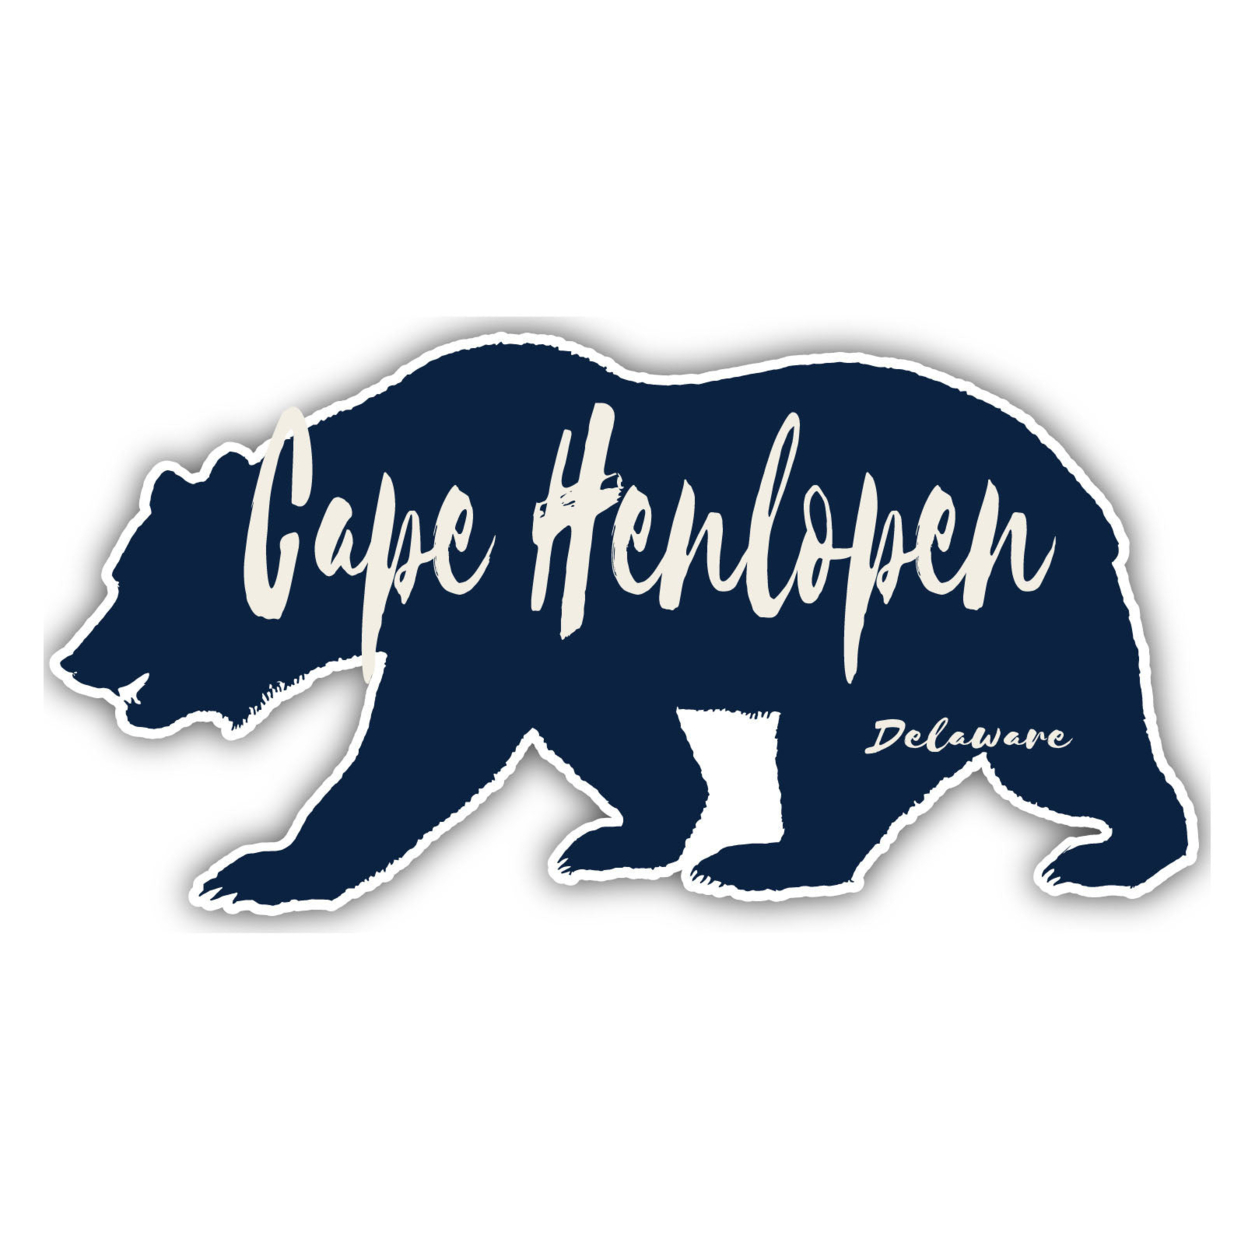 Cape Henlopen Delaware Souvenir Decorative Stickers (Choose Theme And Size) - Single Unit, 8-Inch, Bear